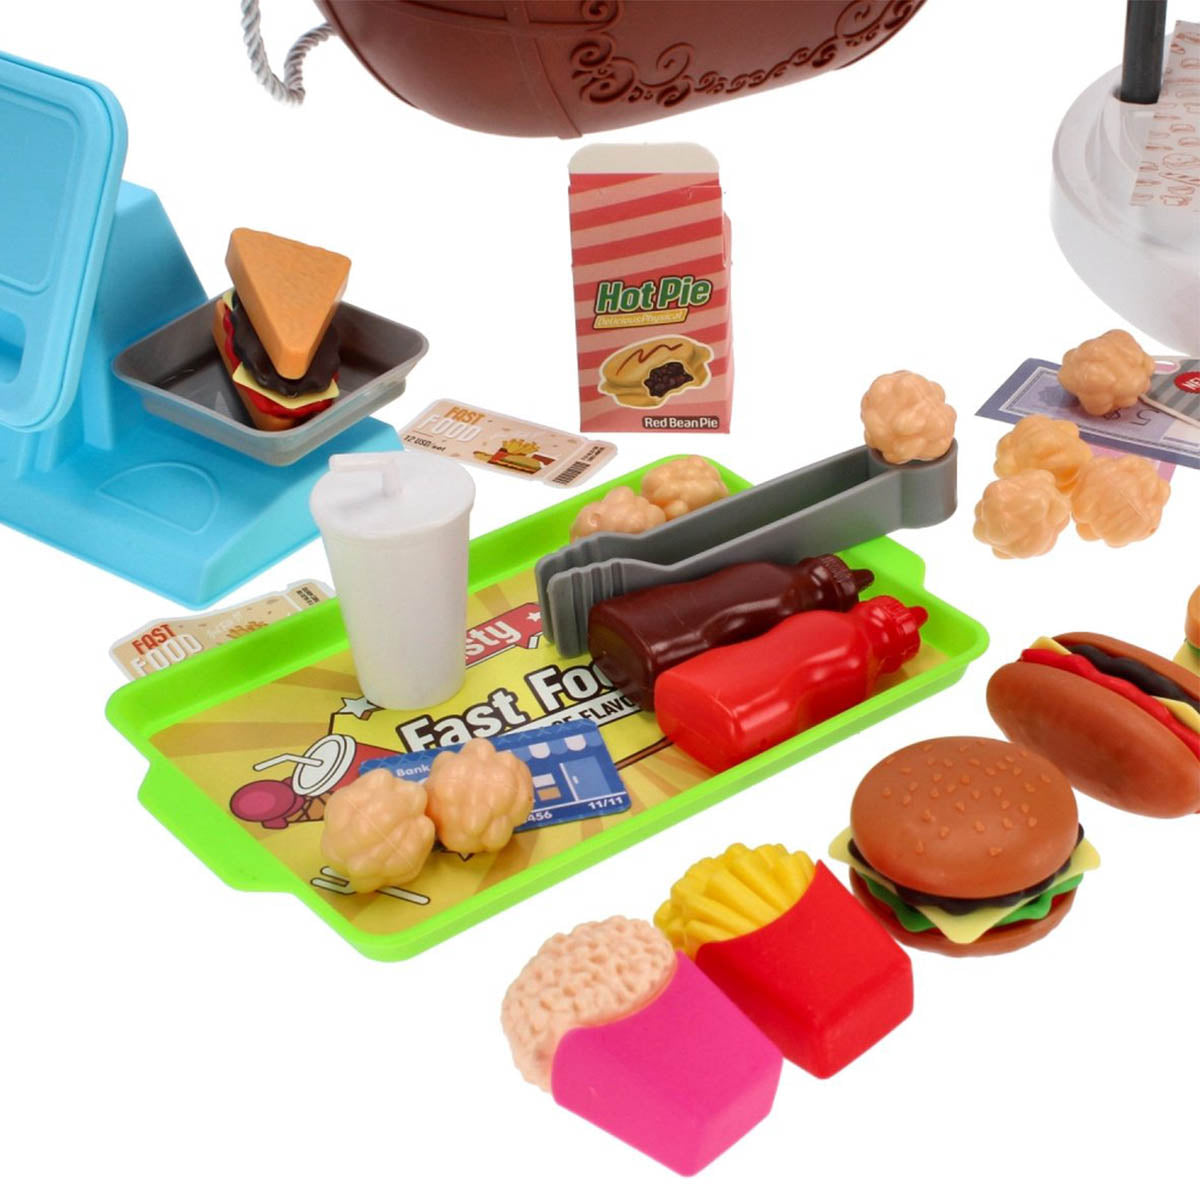 Ariko Speelgoed Koffer Fast-food winkel 58 delig - hamburgers, popcorn, sauzen, tang en nog veel meer - handige meeneem koffer